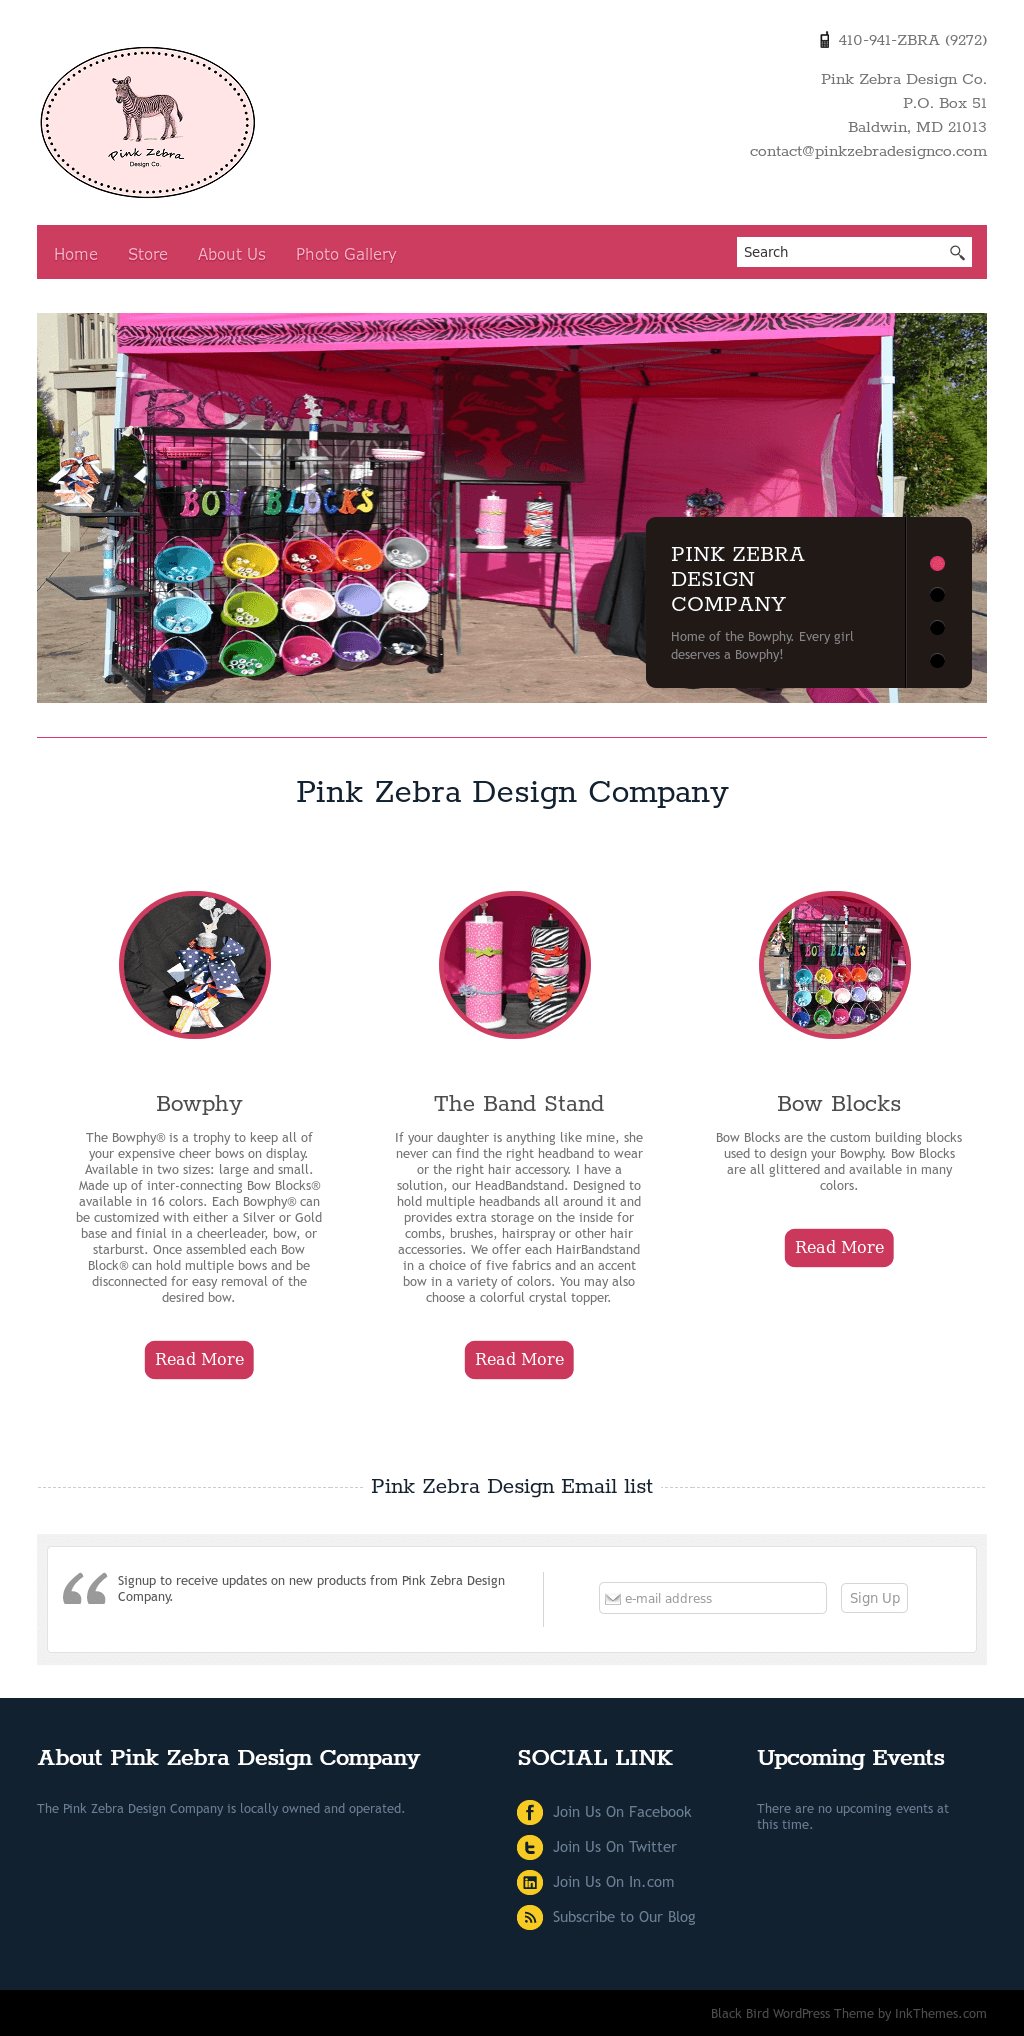 Pink Zebra Company Logo - Pink Zebra Design Company Competitors, Revenue and Employees